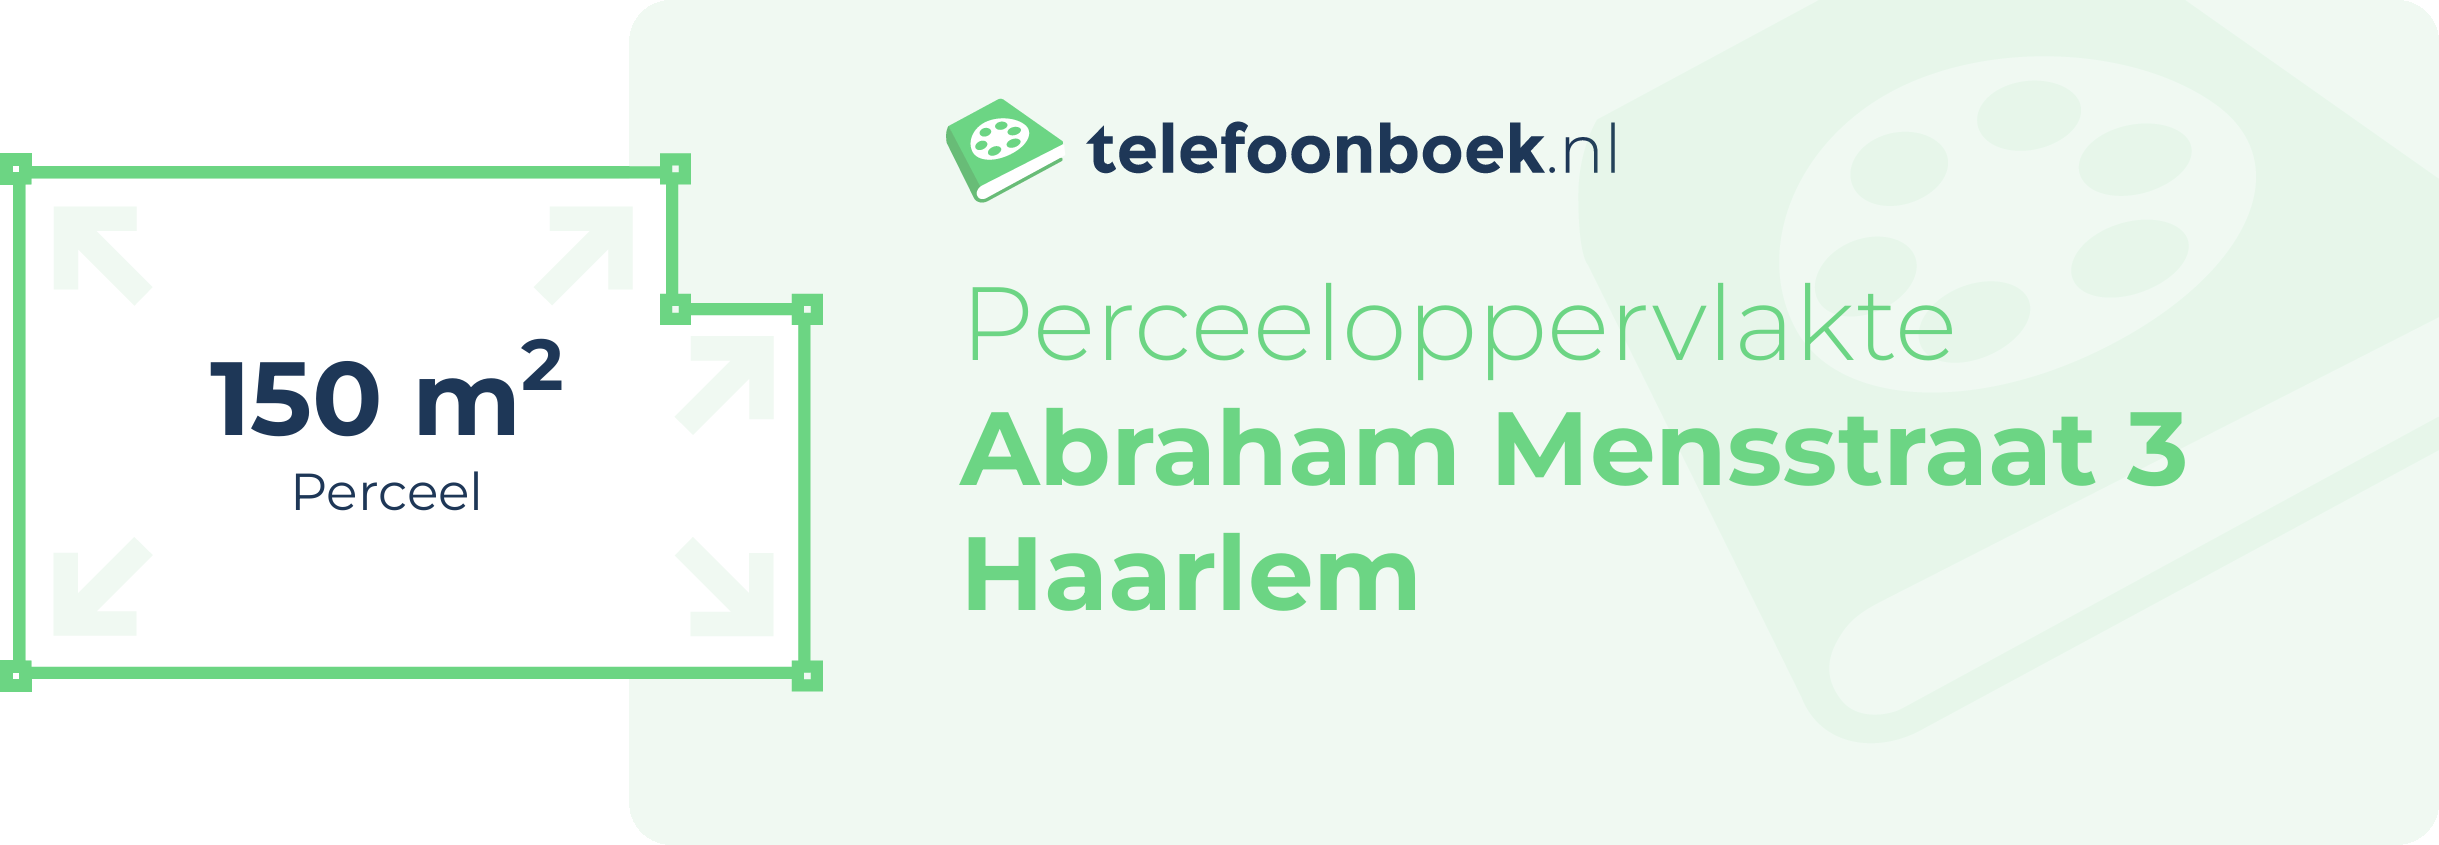 Perceeloppervlakte Abraham Mensstraat 3 Haarlem